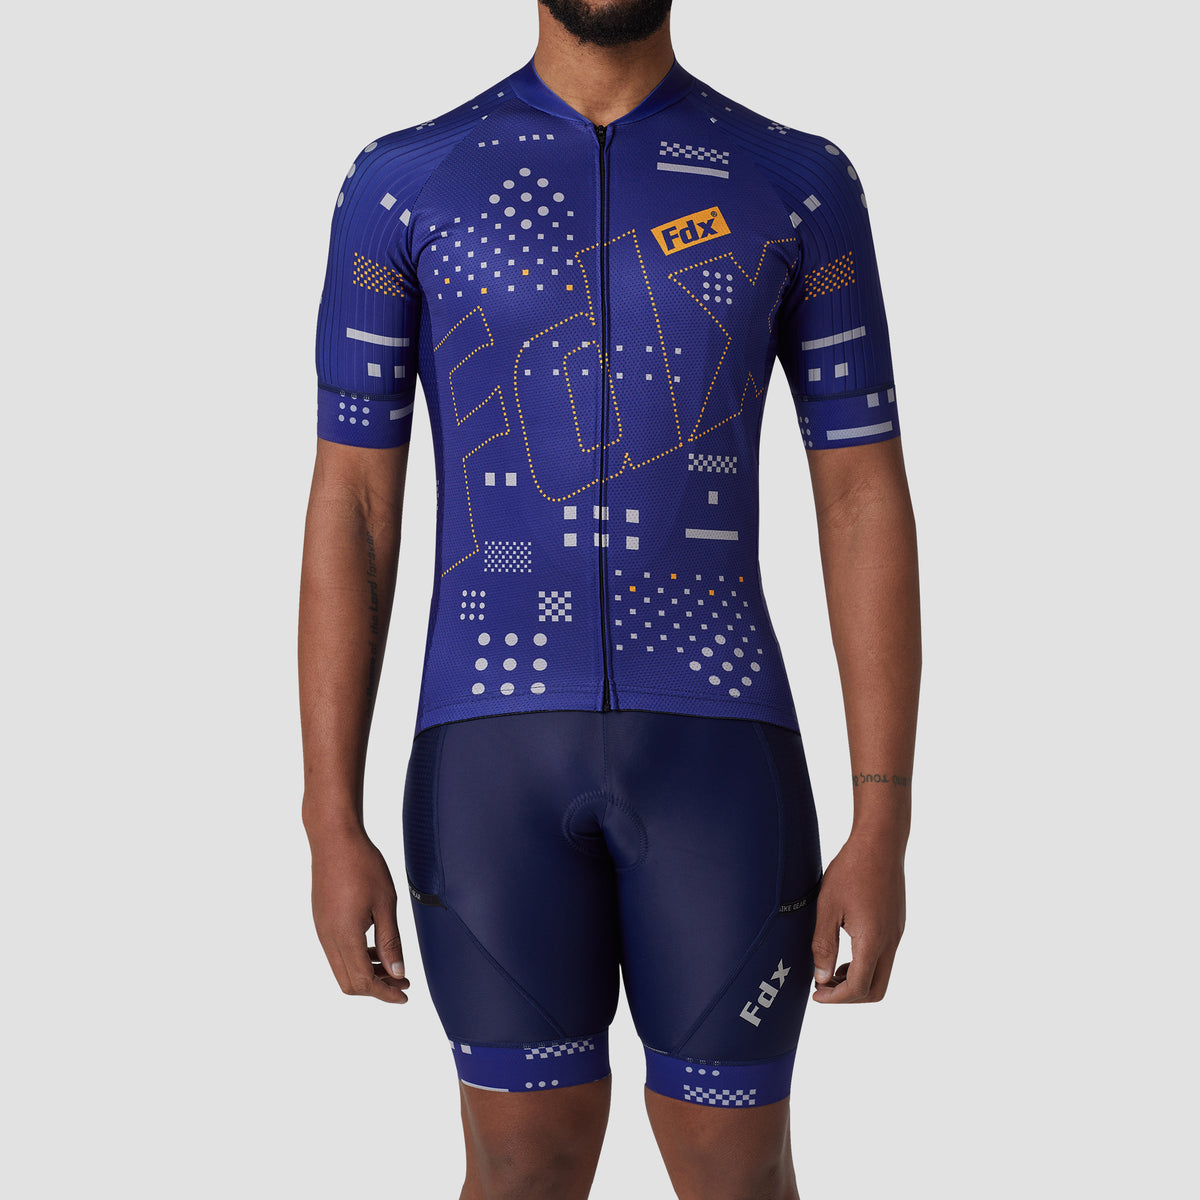 Fdx All Day Men's Blue Set Summer Cycling Jersey & Bib Shorts